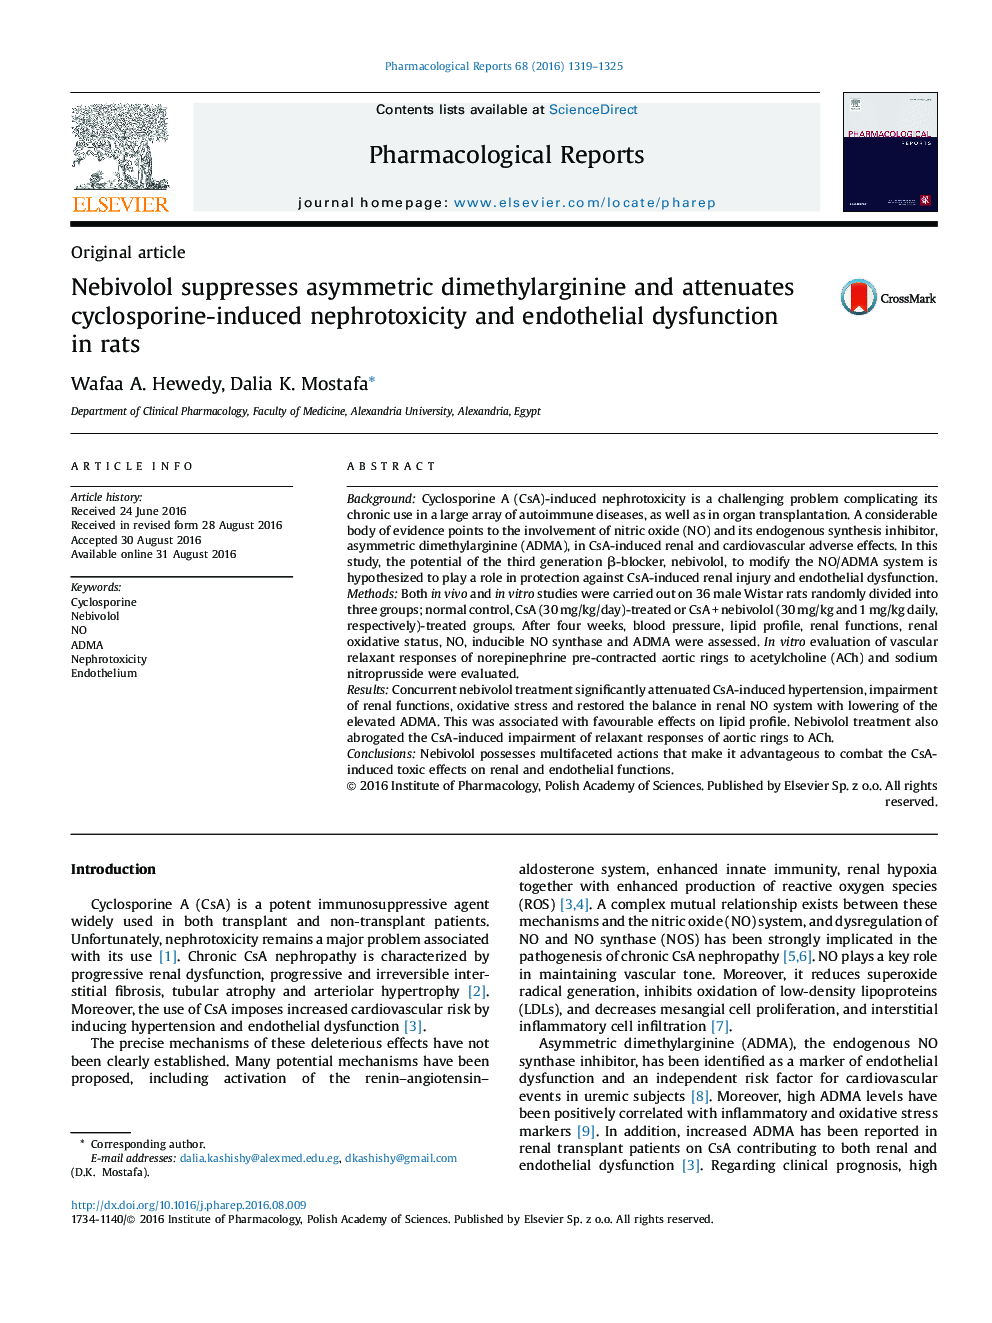 Nebivolol suppresses asymmetric dimethylarginine and attenuates cyclosporine-induced nephrotoxicity and endothelial dysfunction in rats